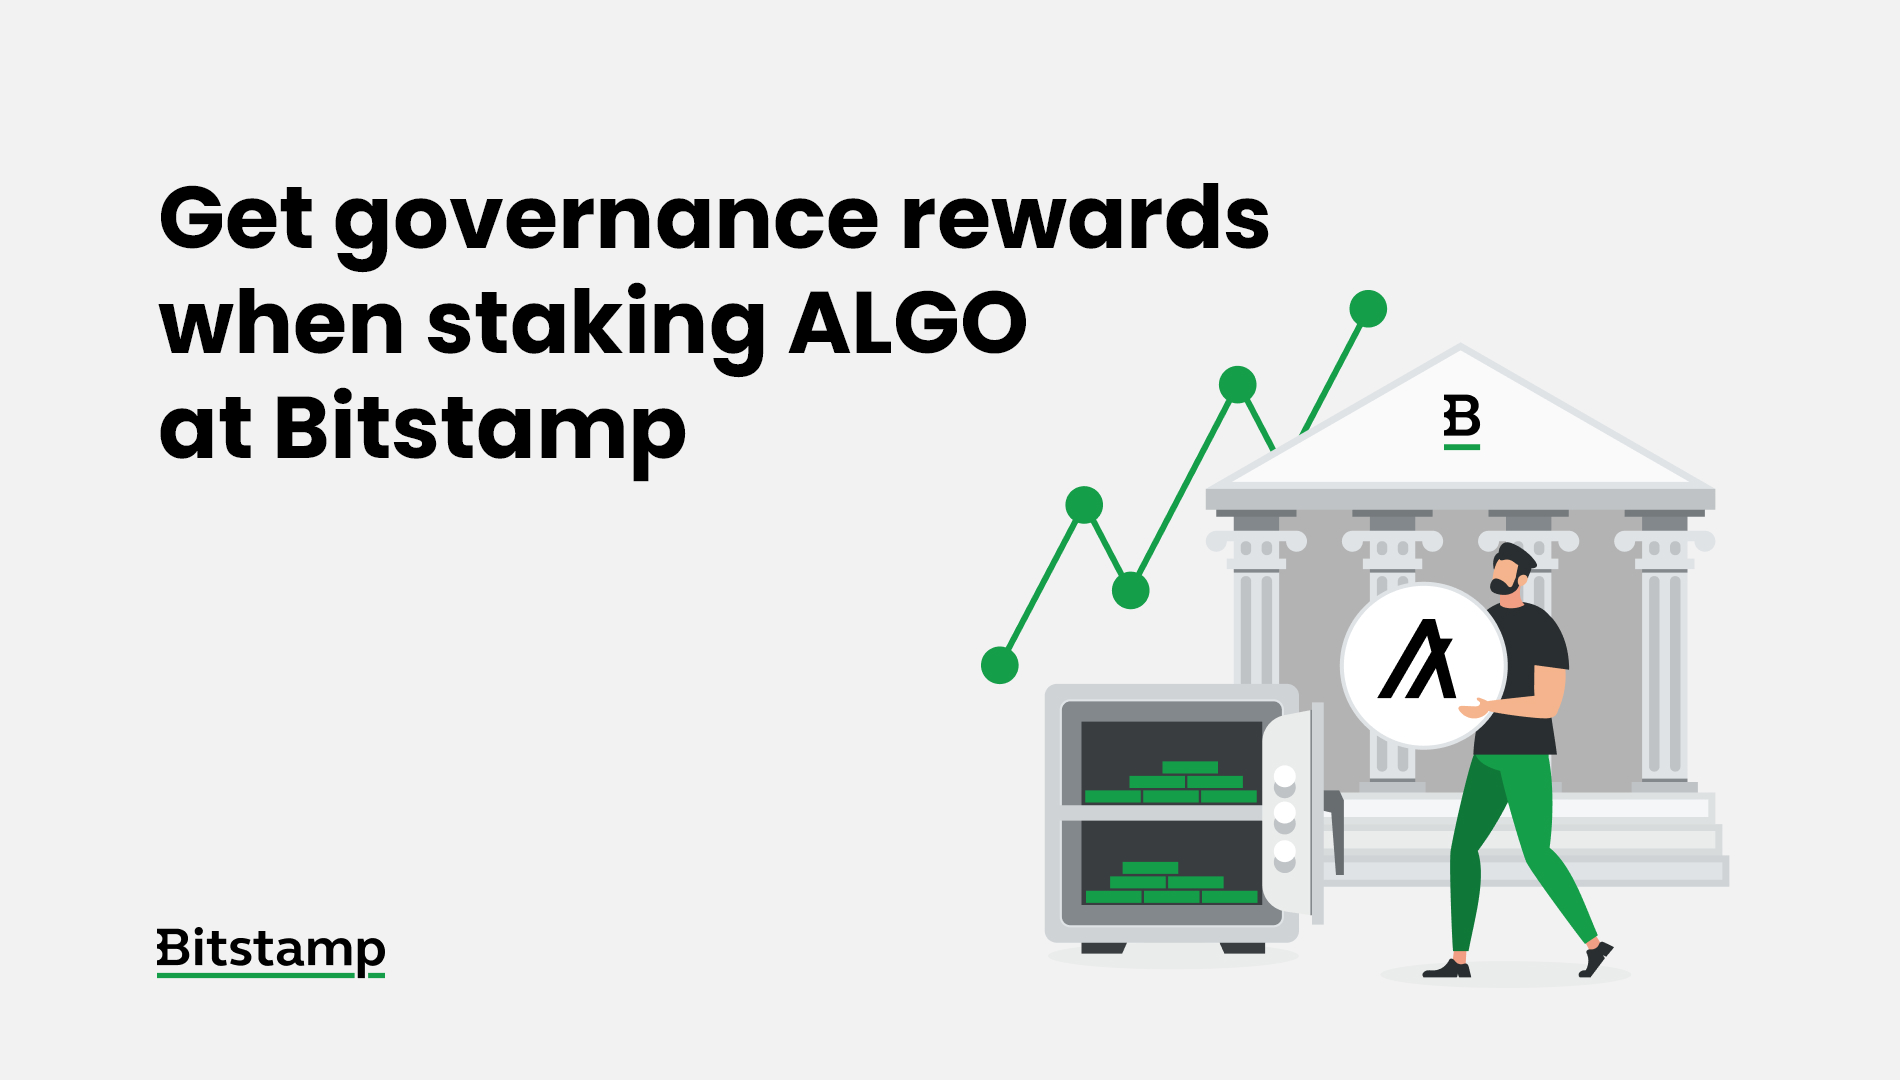 We’ll offer governance rewards in the ALGO staking program